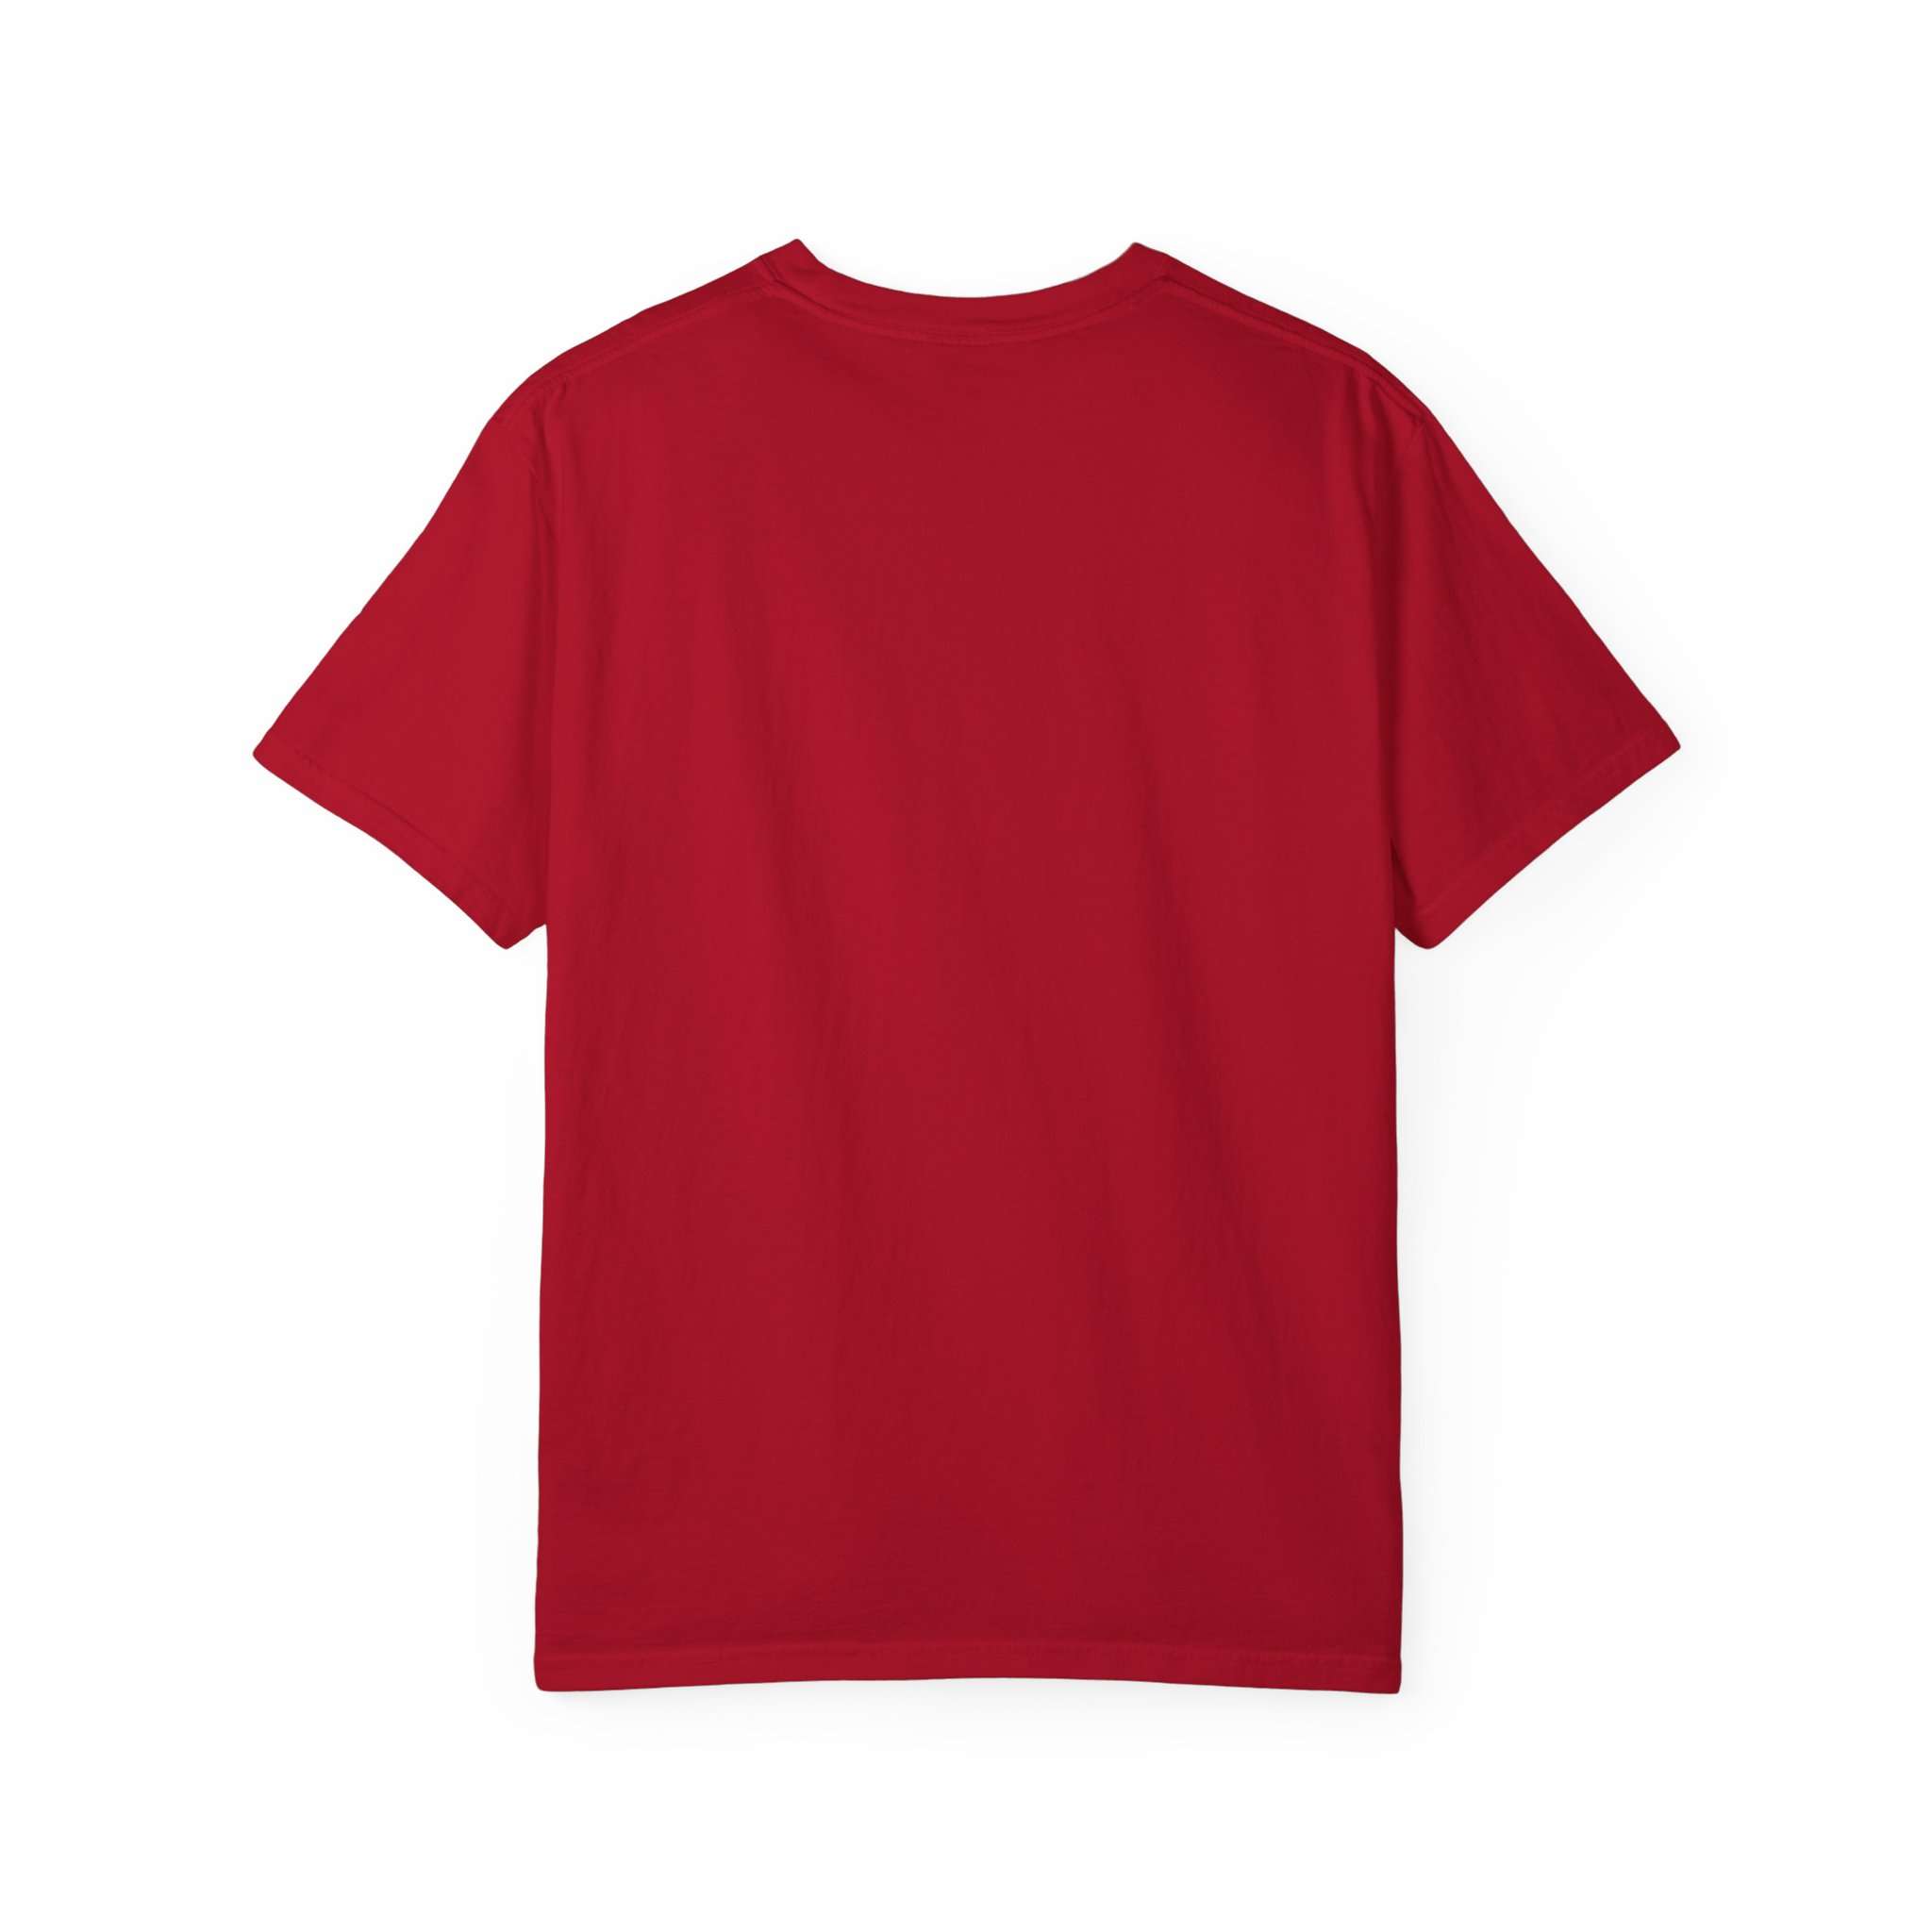 Suguru Geto Signature Design Unisex Garment-Dyed T-Shirt